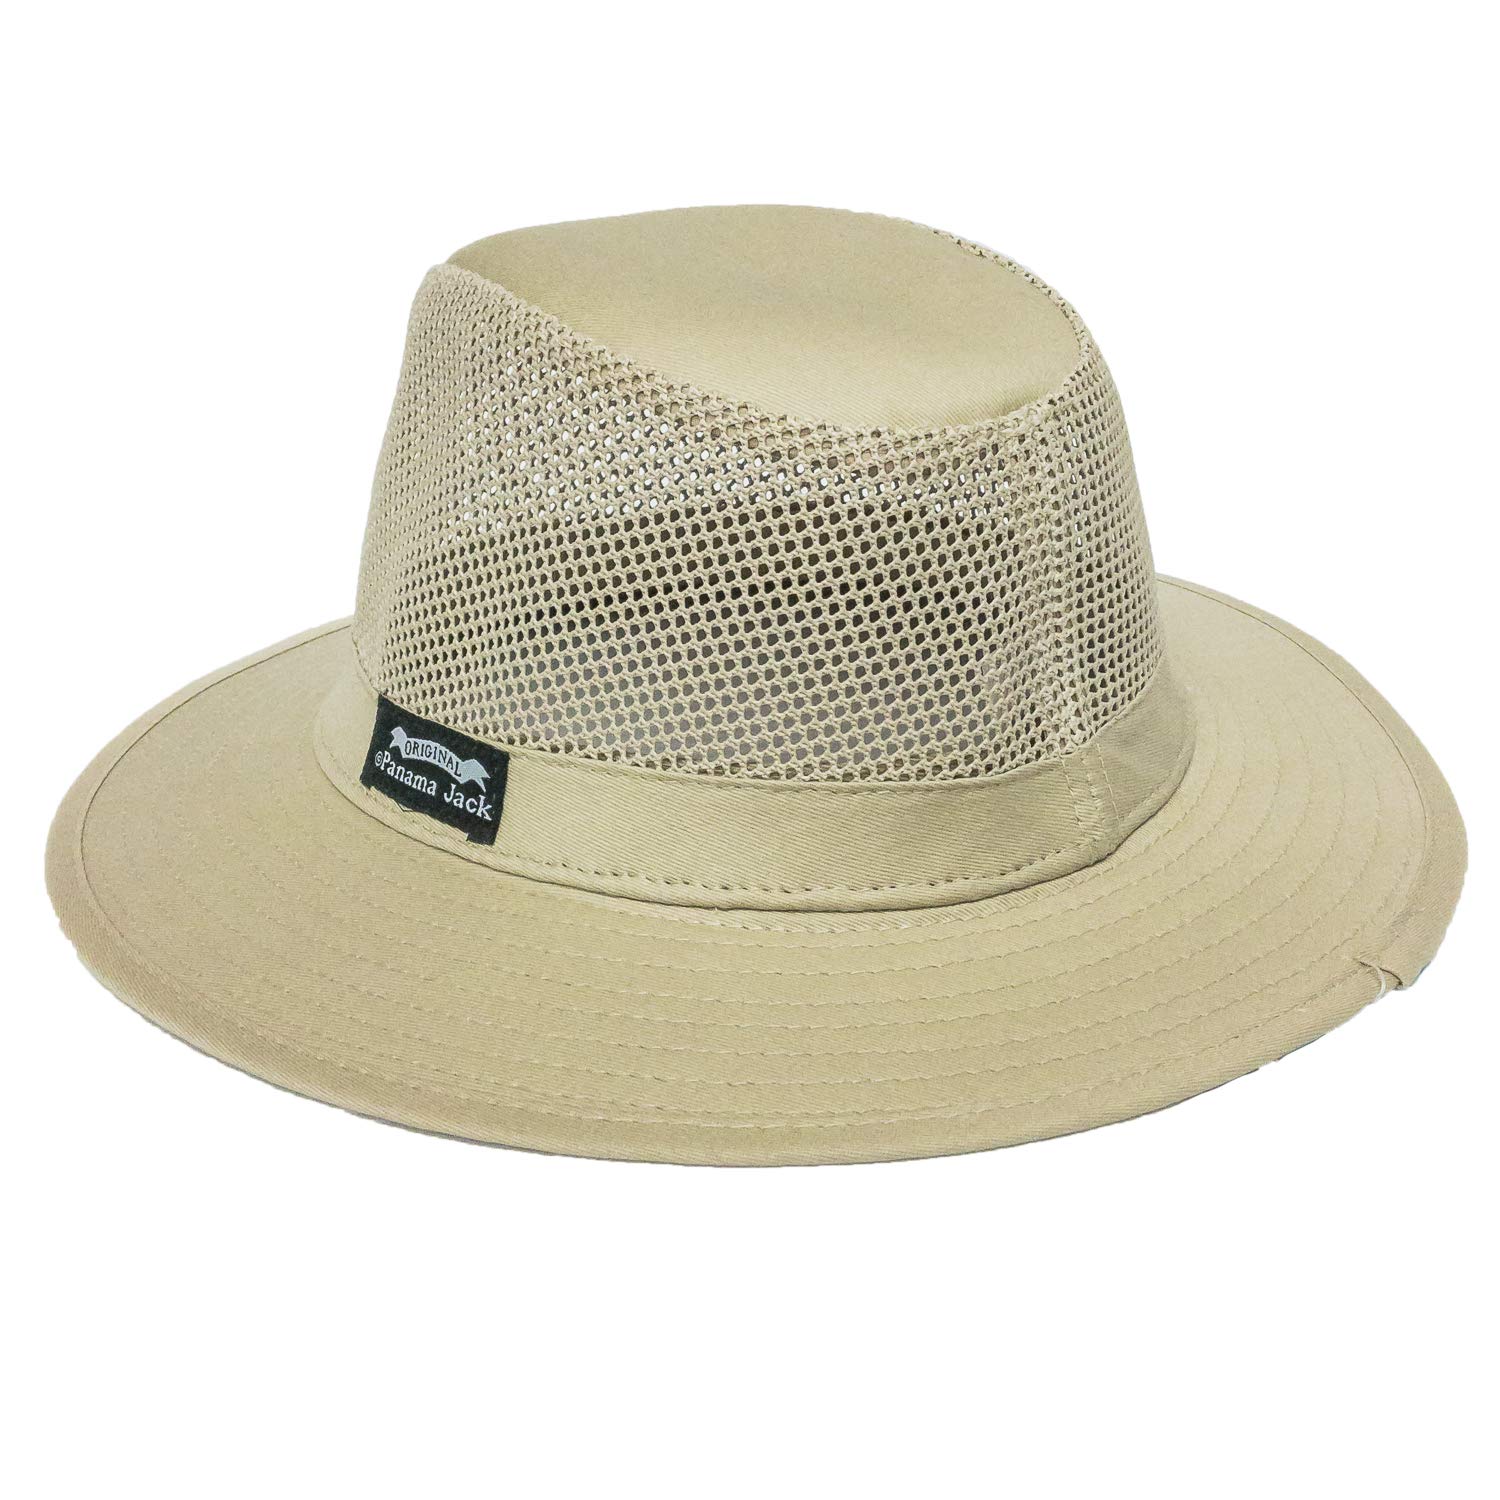 safari hat ebay